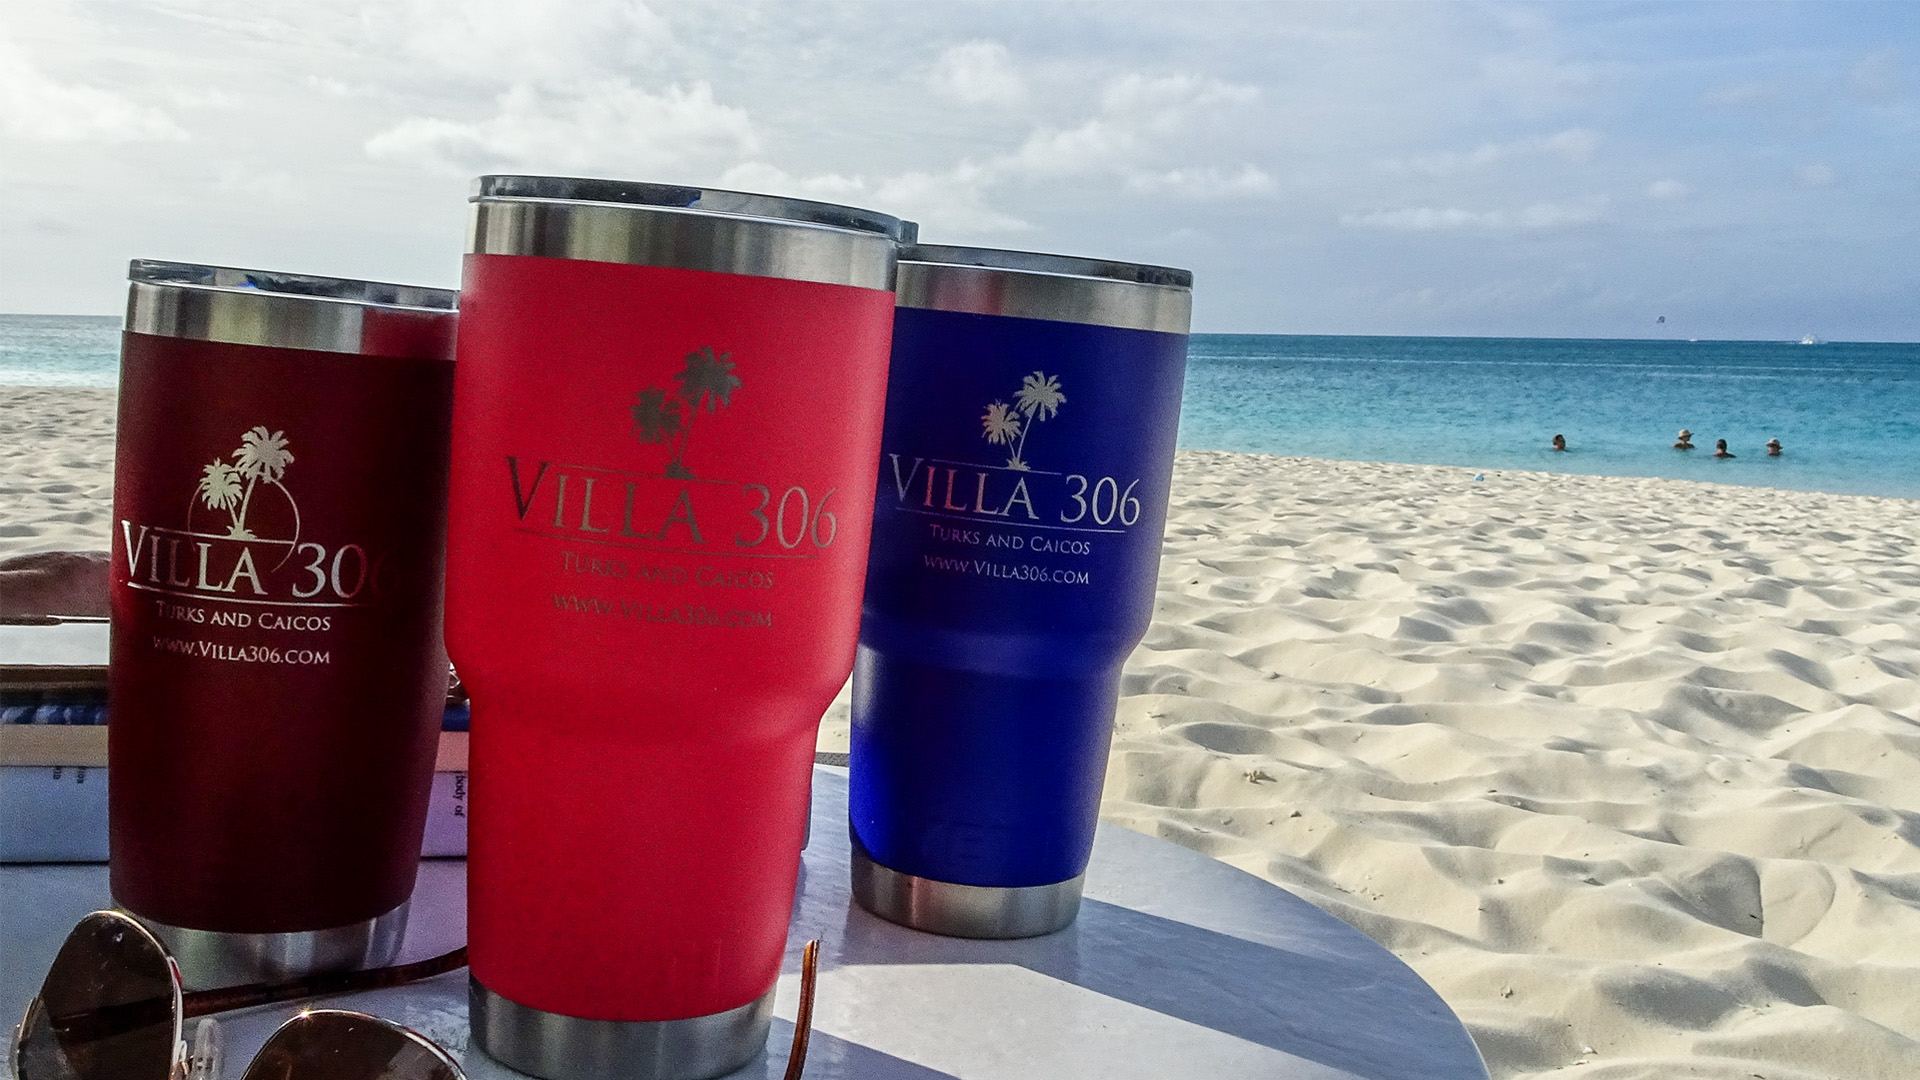 Yeti drink cups on the beach.